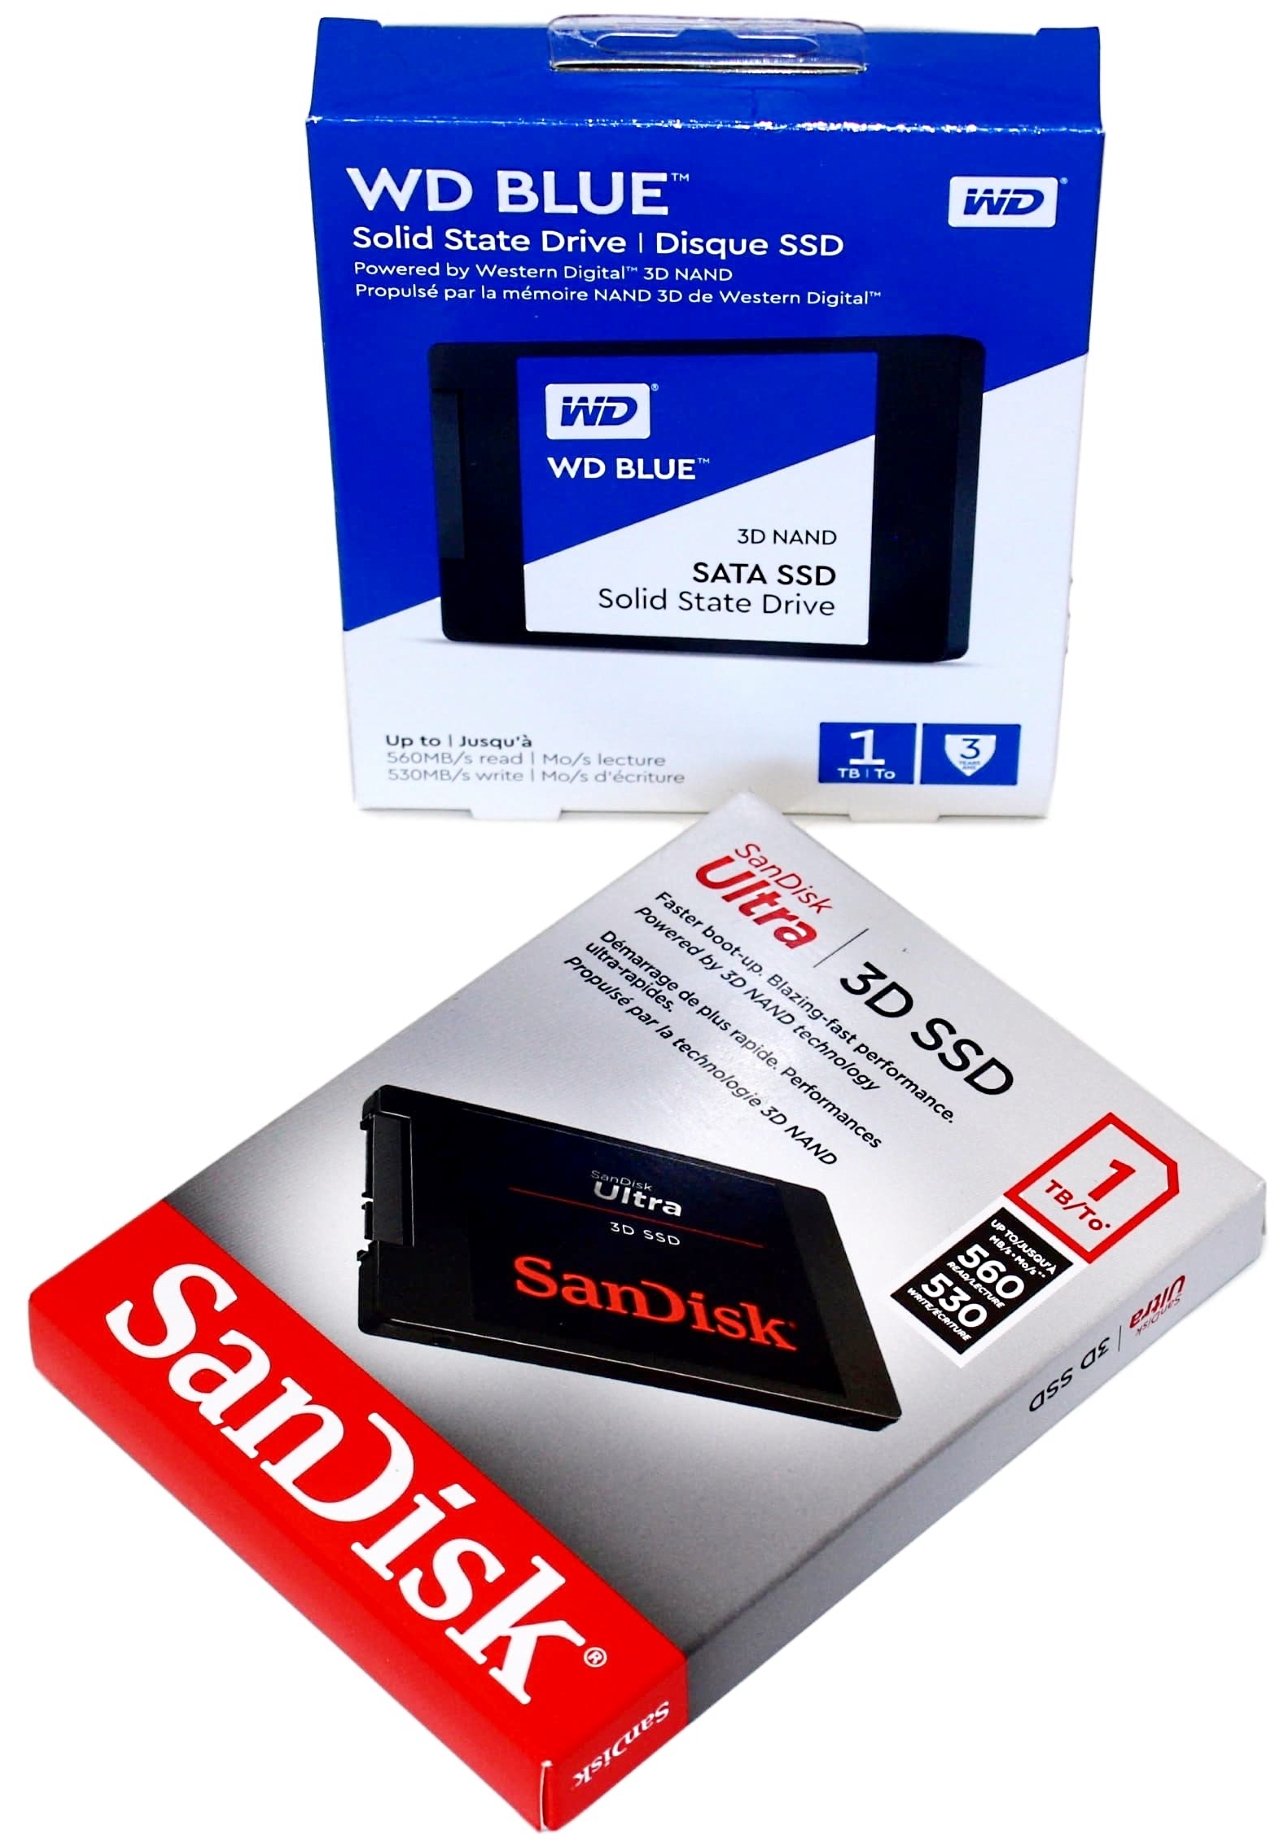 WD Blue 3D & SanDisk Ultra 3D 1TB SATA III SSDs Review